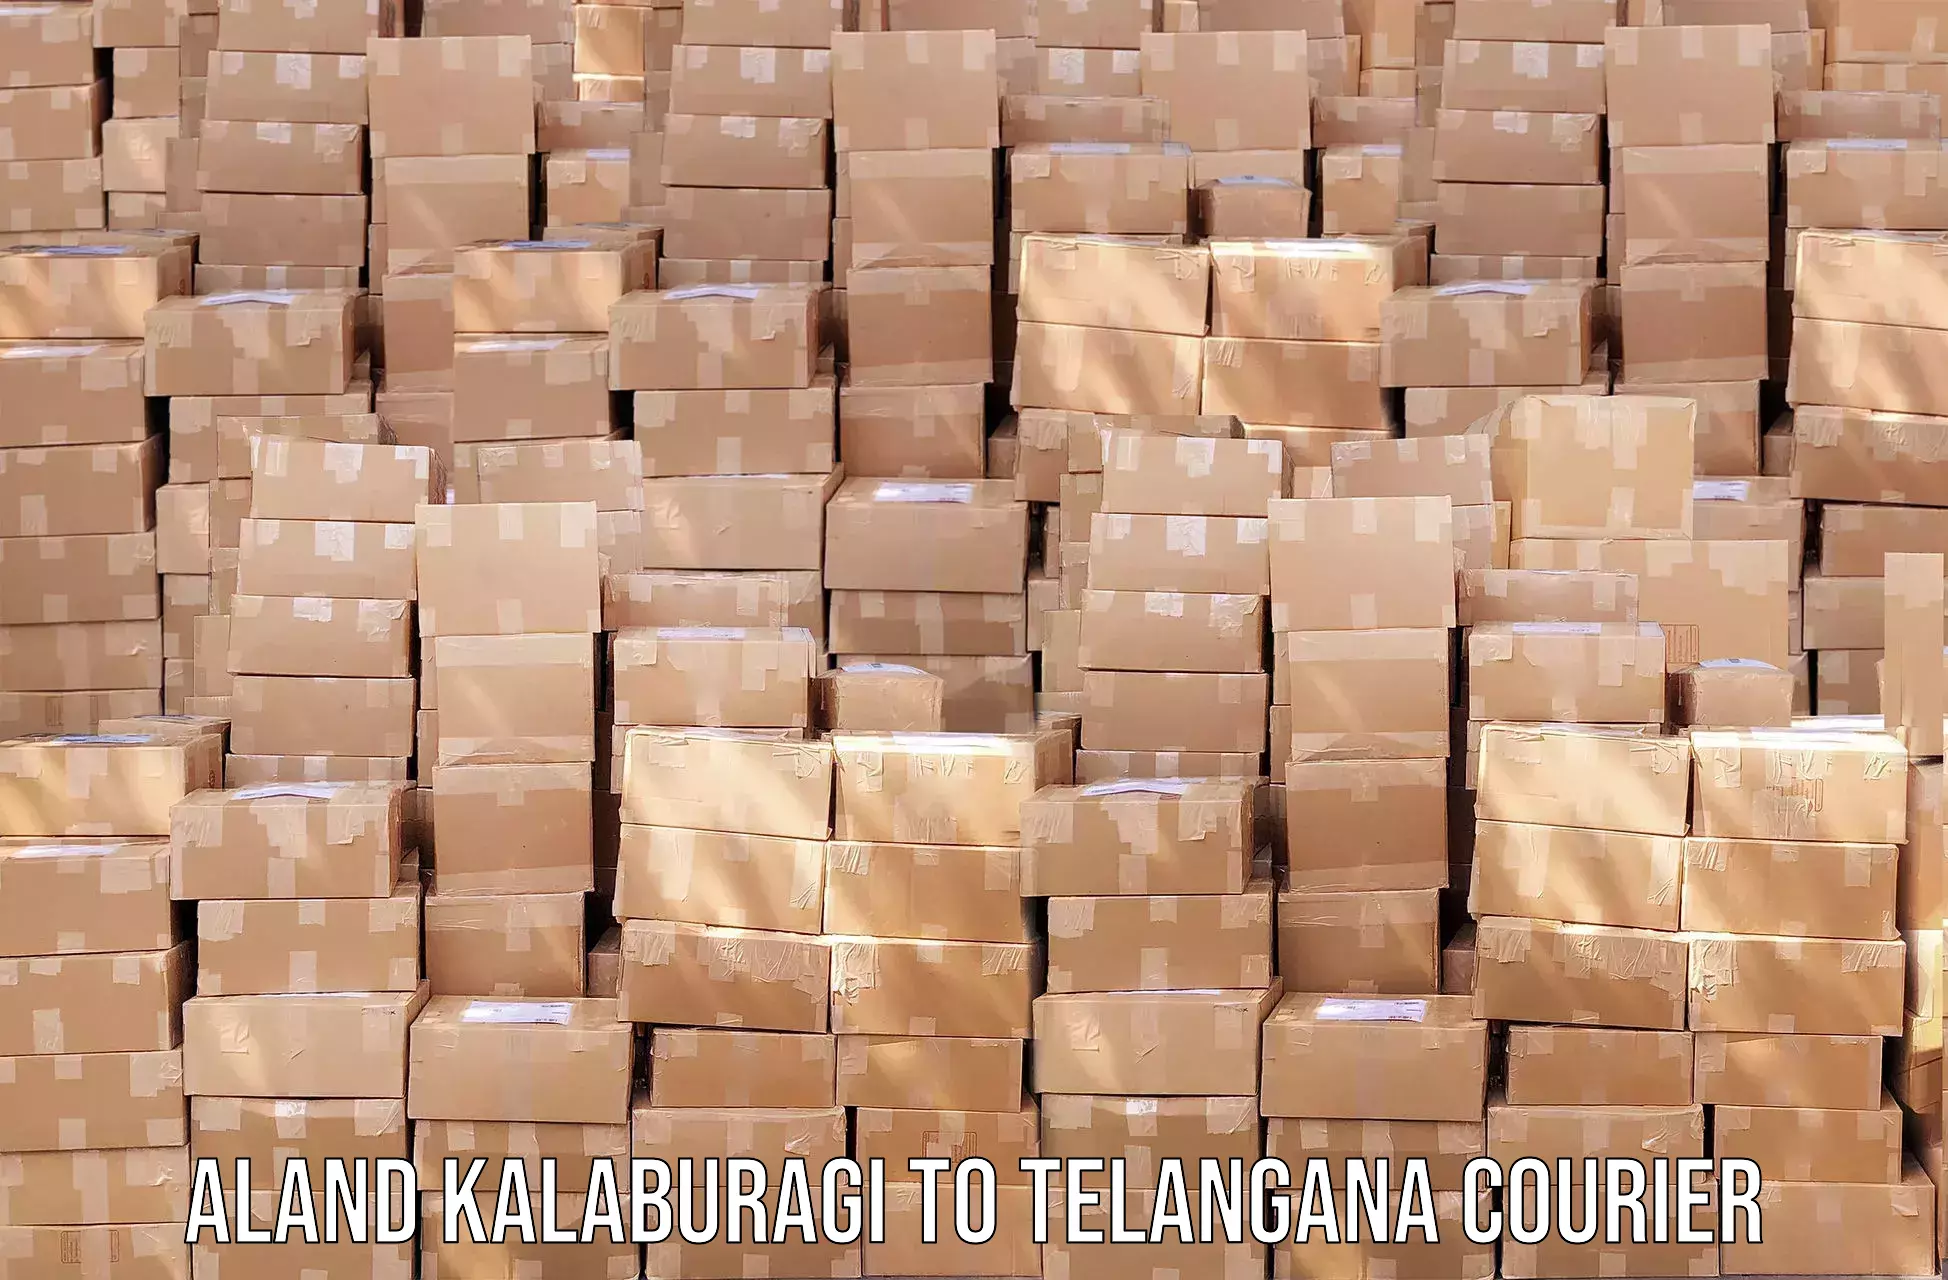 Courier service efficiency in Aland Kalaburagi to Warangal